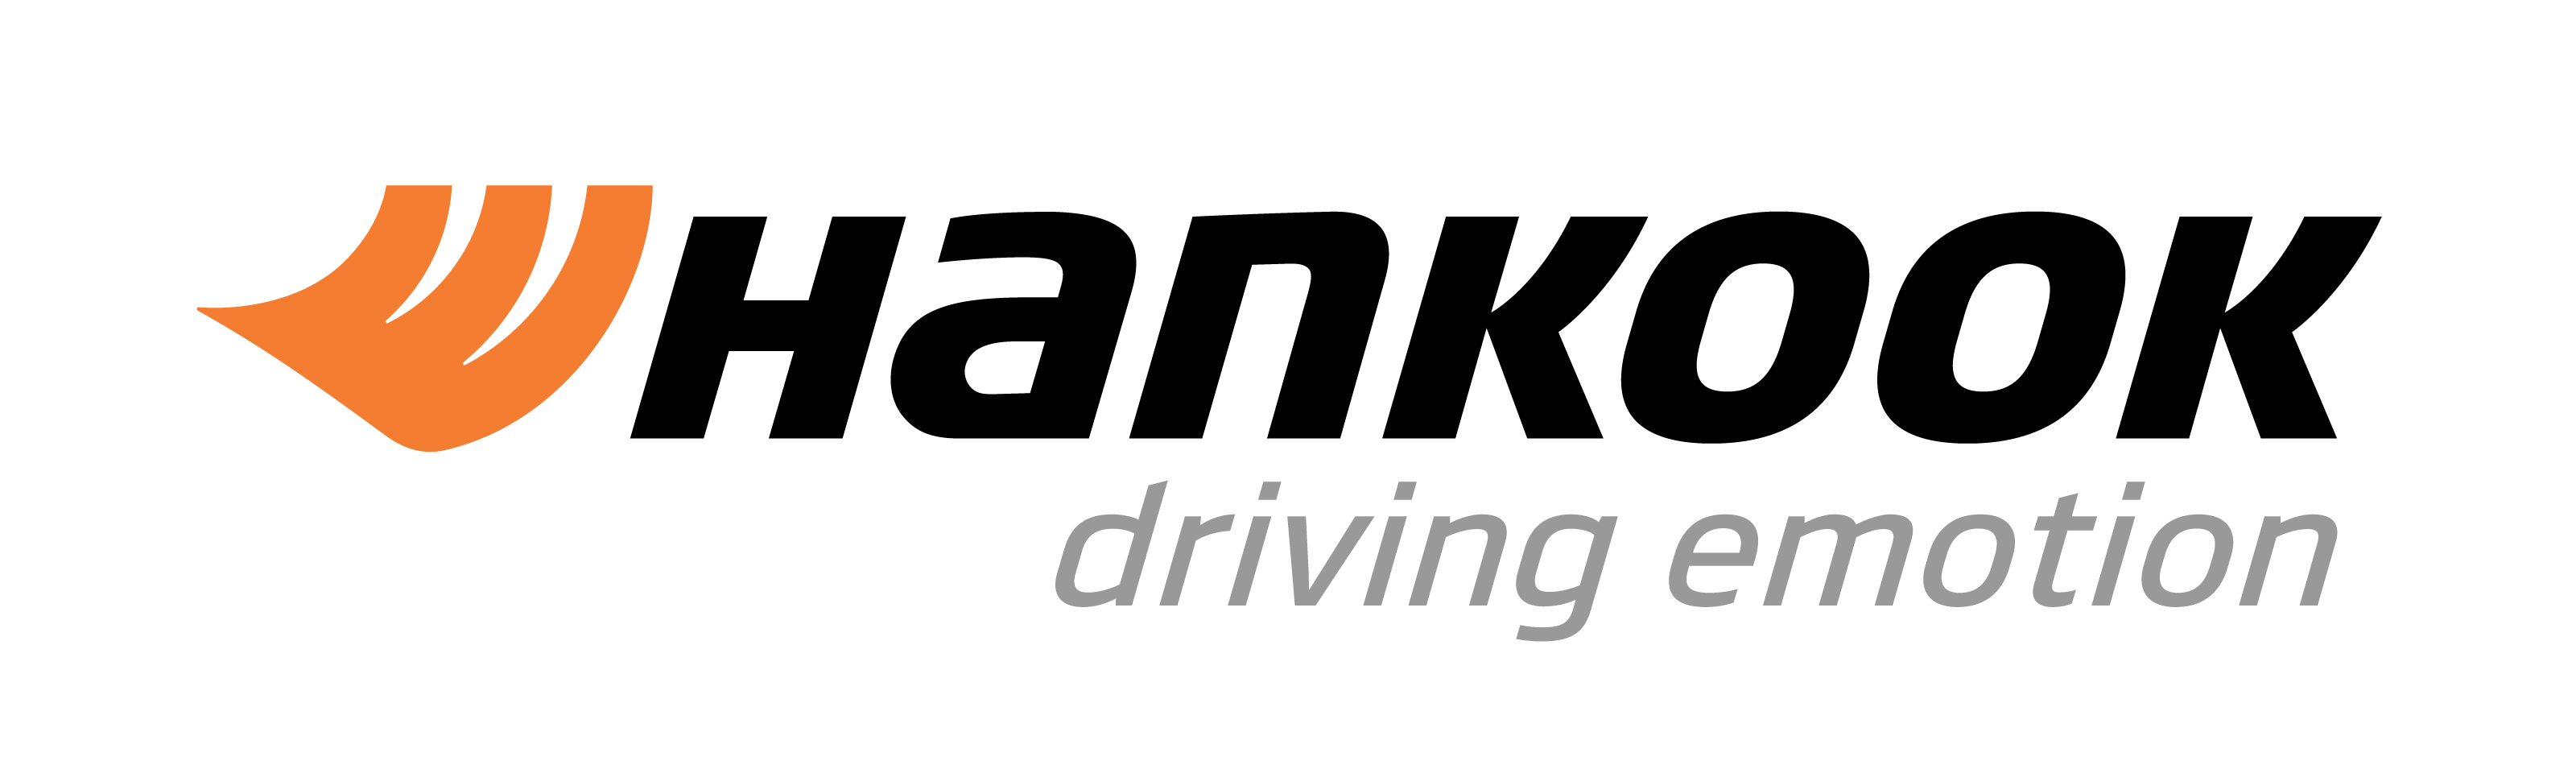 Hankook Tires Logo 2019.jpg